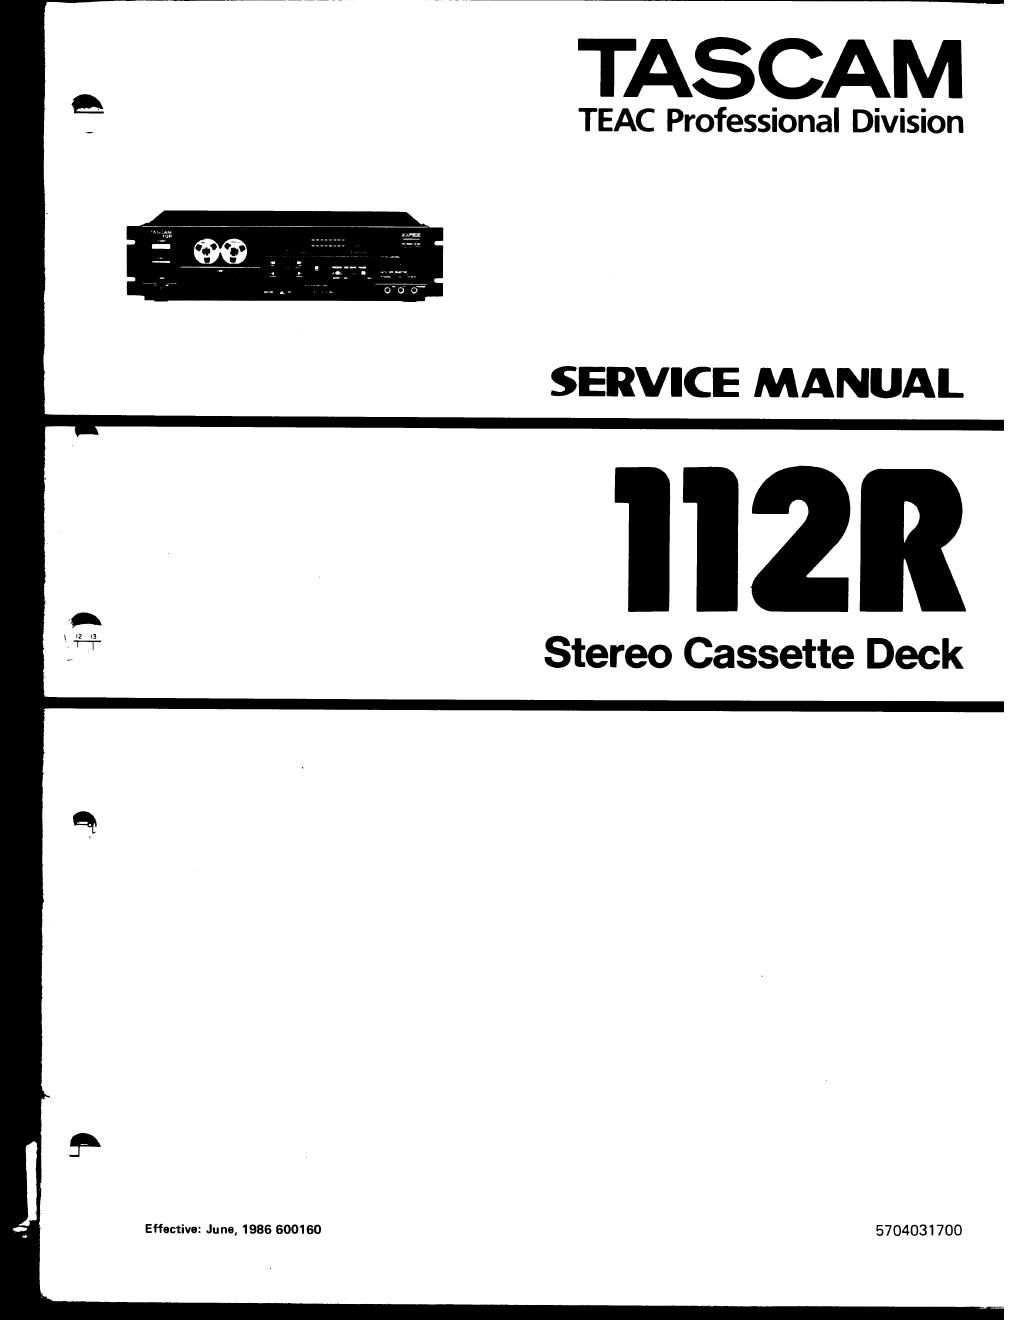 tascam 112 r service manual